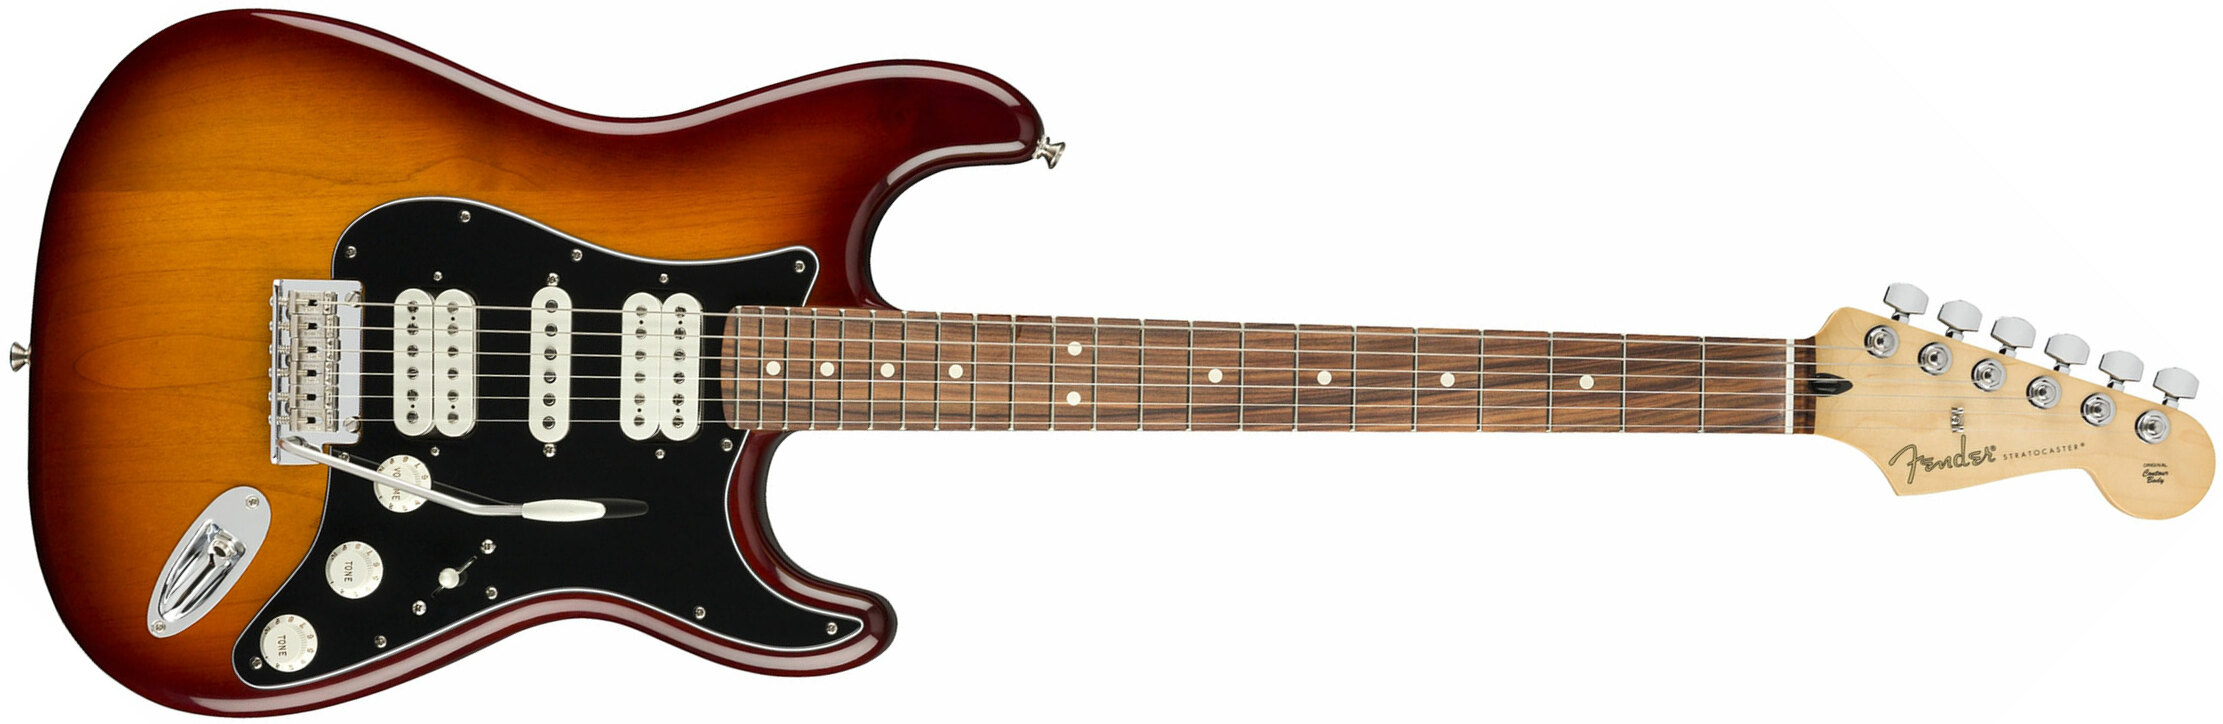 Fender Strat Player Mex Hsh Pf - Tobacco Burst - Str shape electric guitar - Main picture